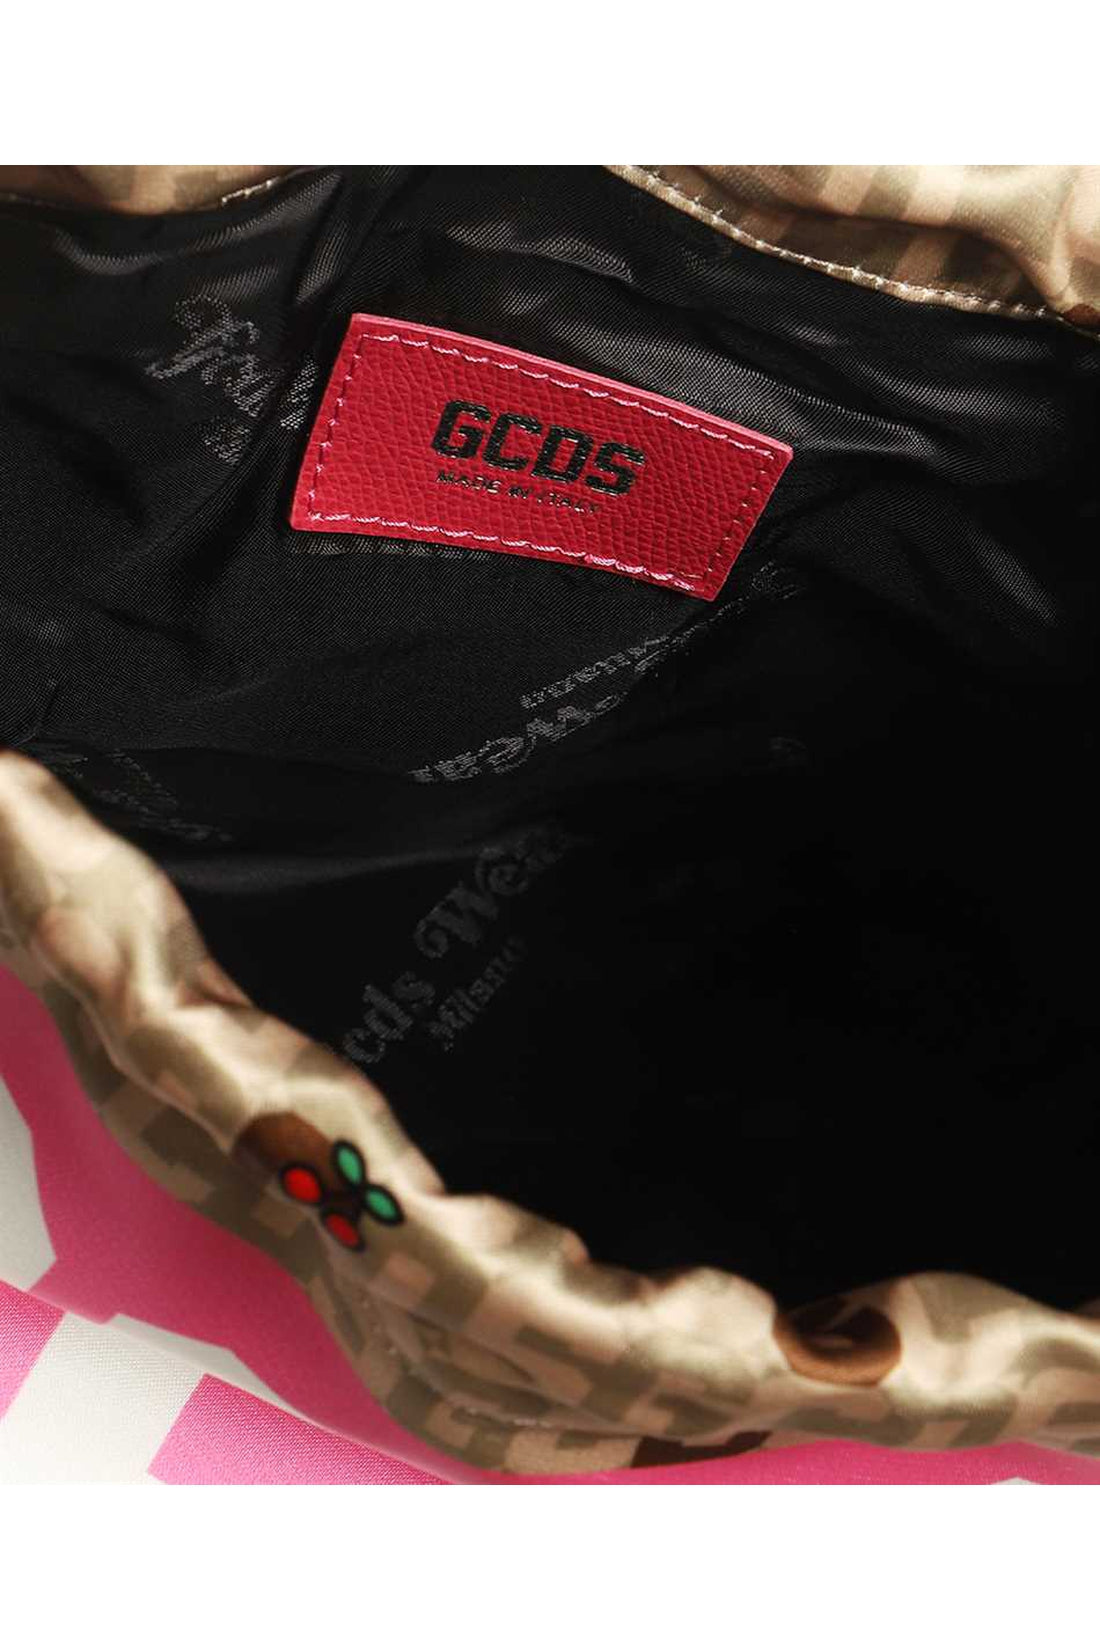 GCDS-OUTLET-SALE-GCDS x Hello Kitty - Bucket bag-ARCHIVIST